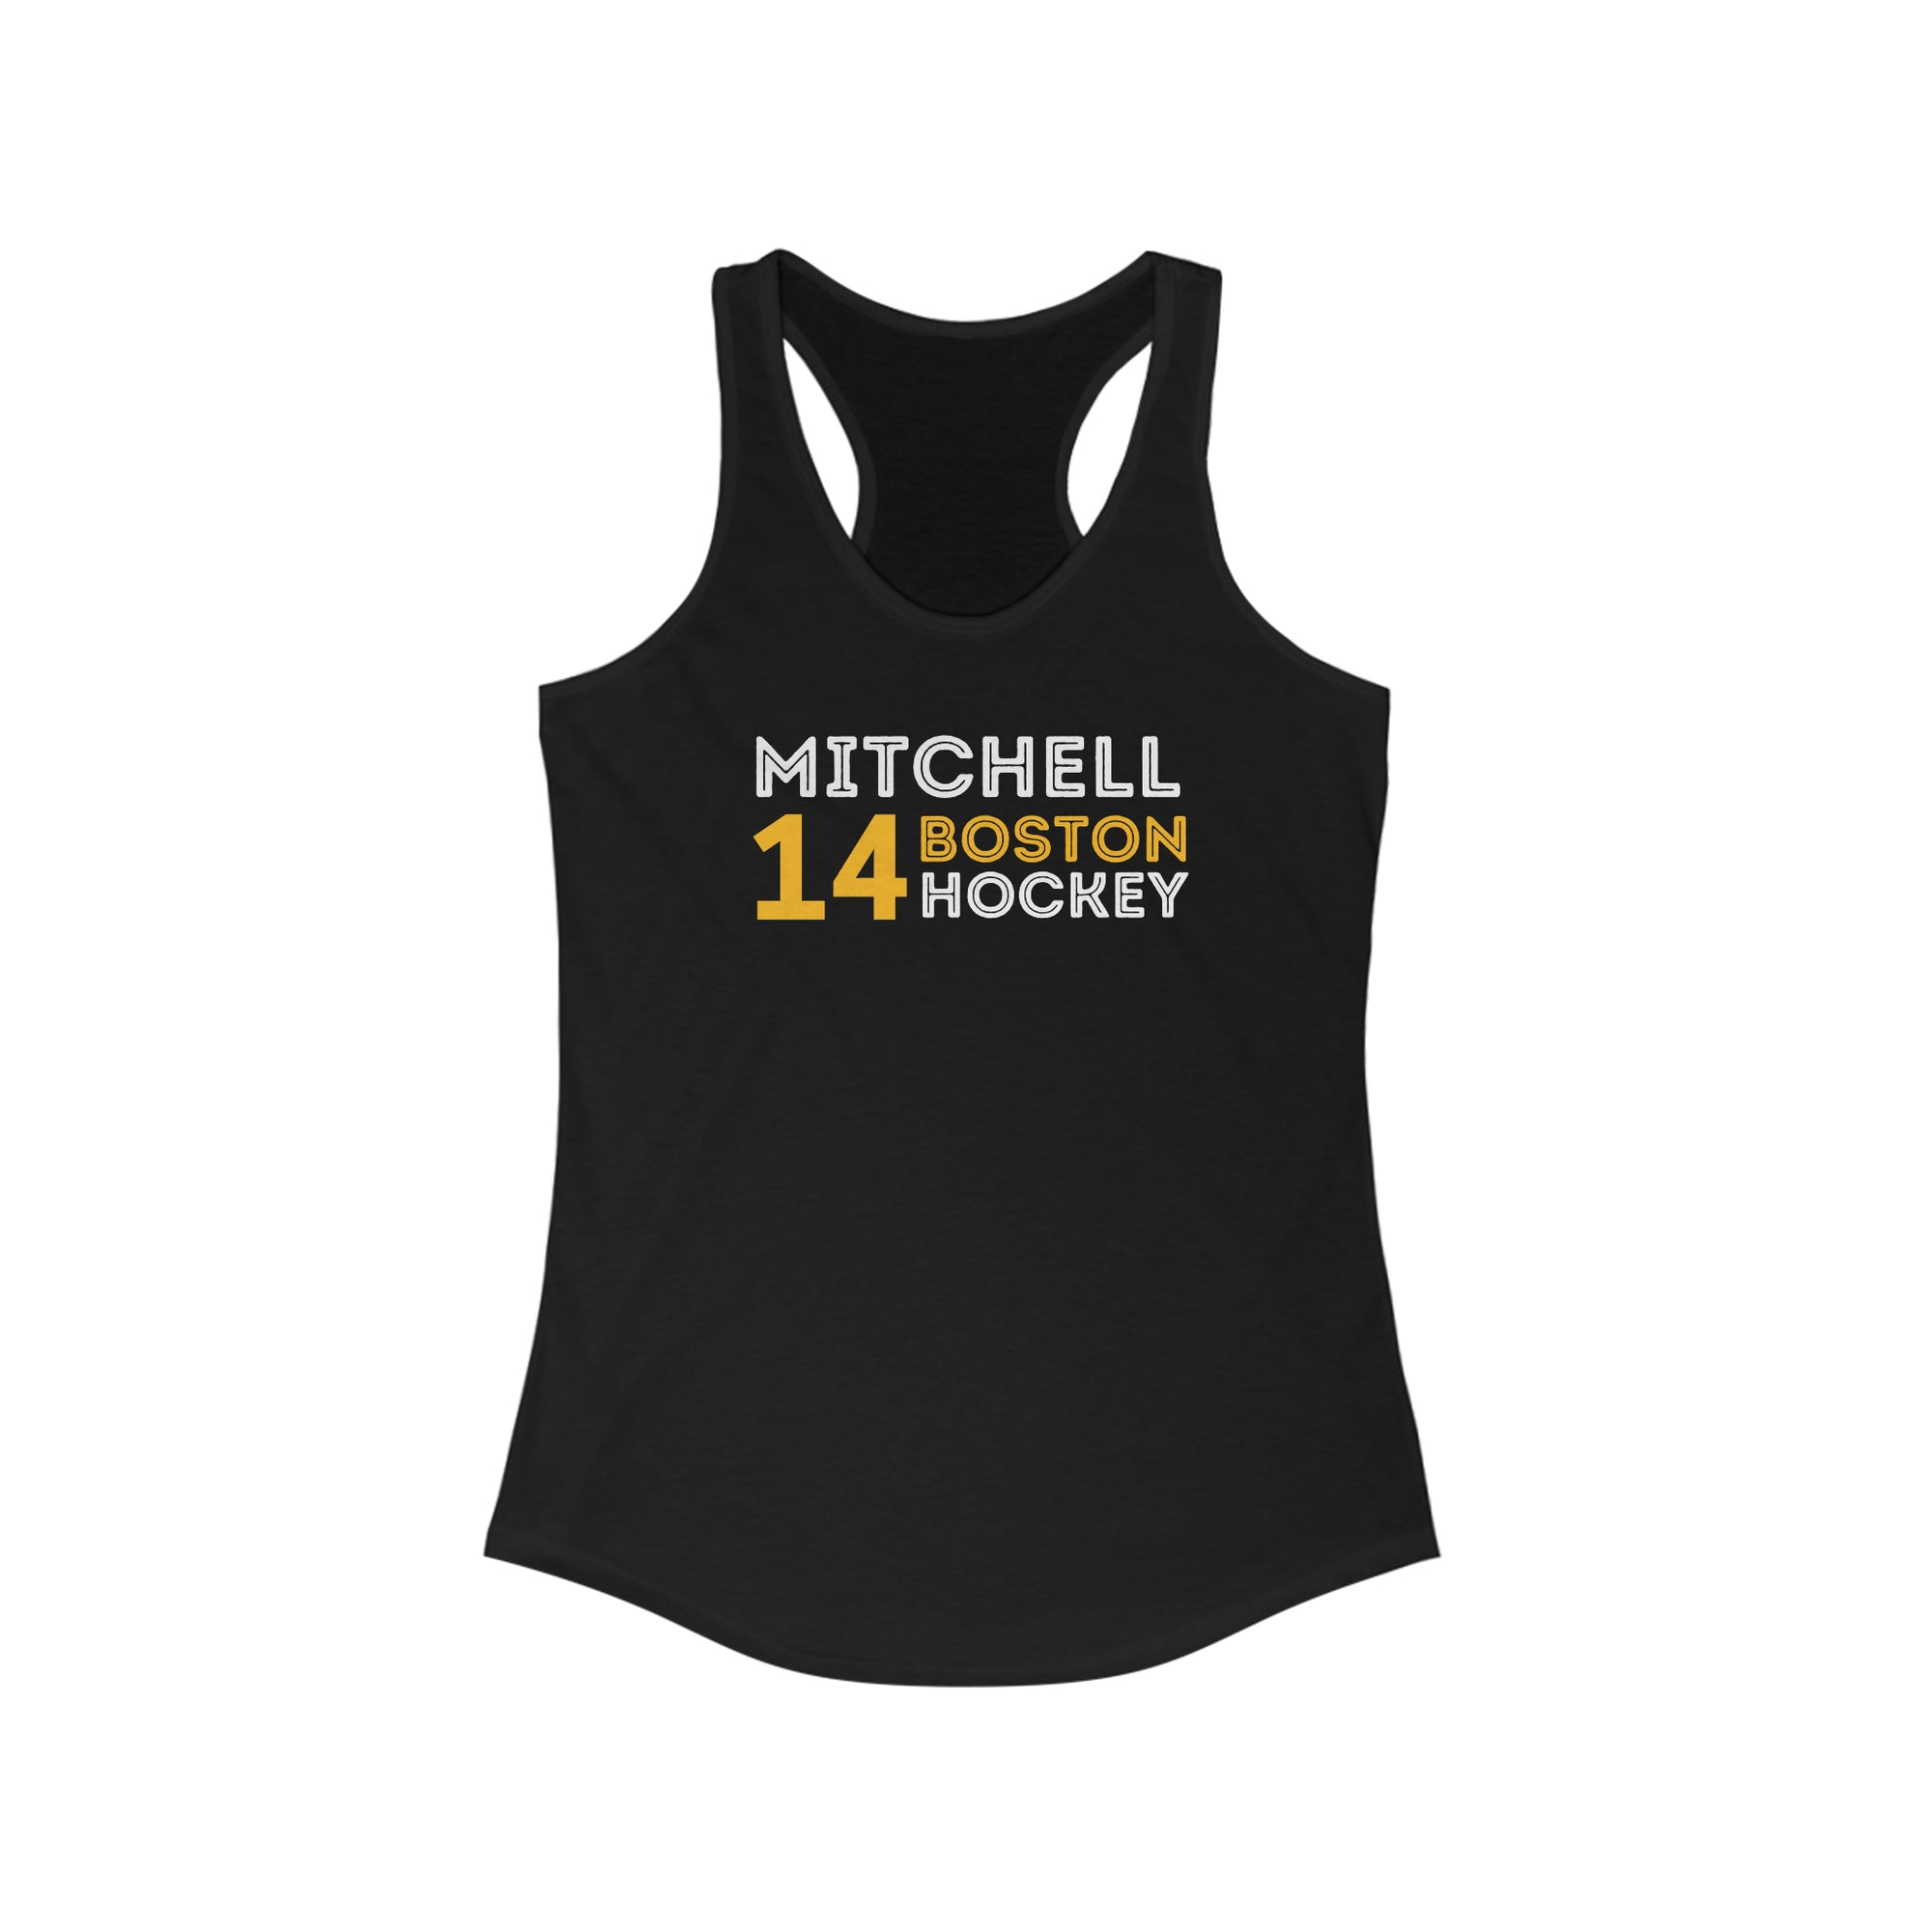 Mitchell 14 Boston Hockey Grafitti Wall Design Women's Ideal Racerback Tank Top